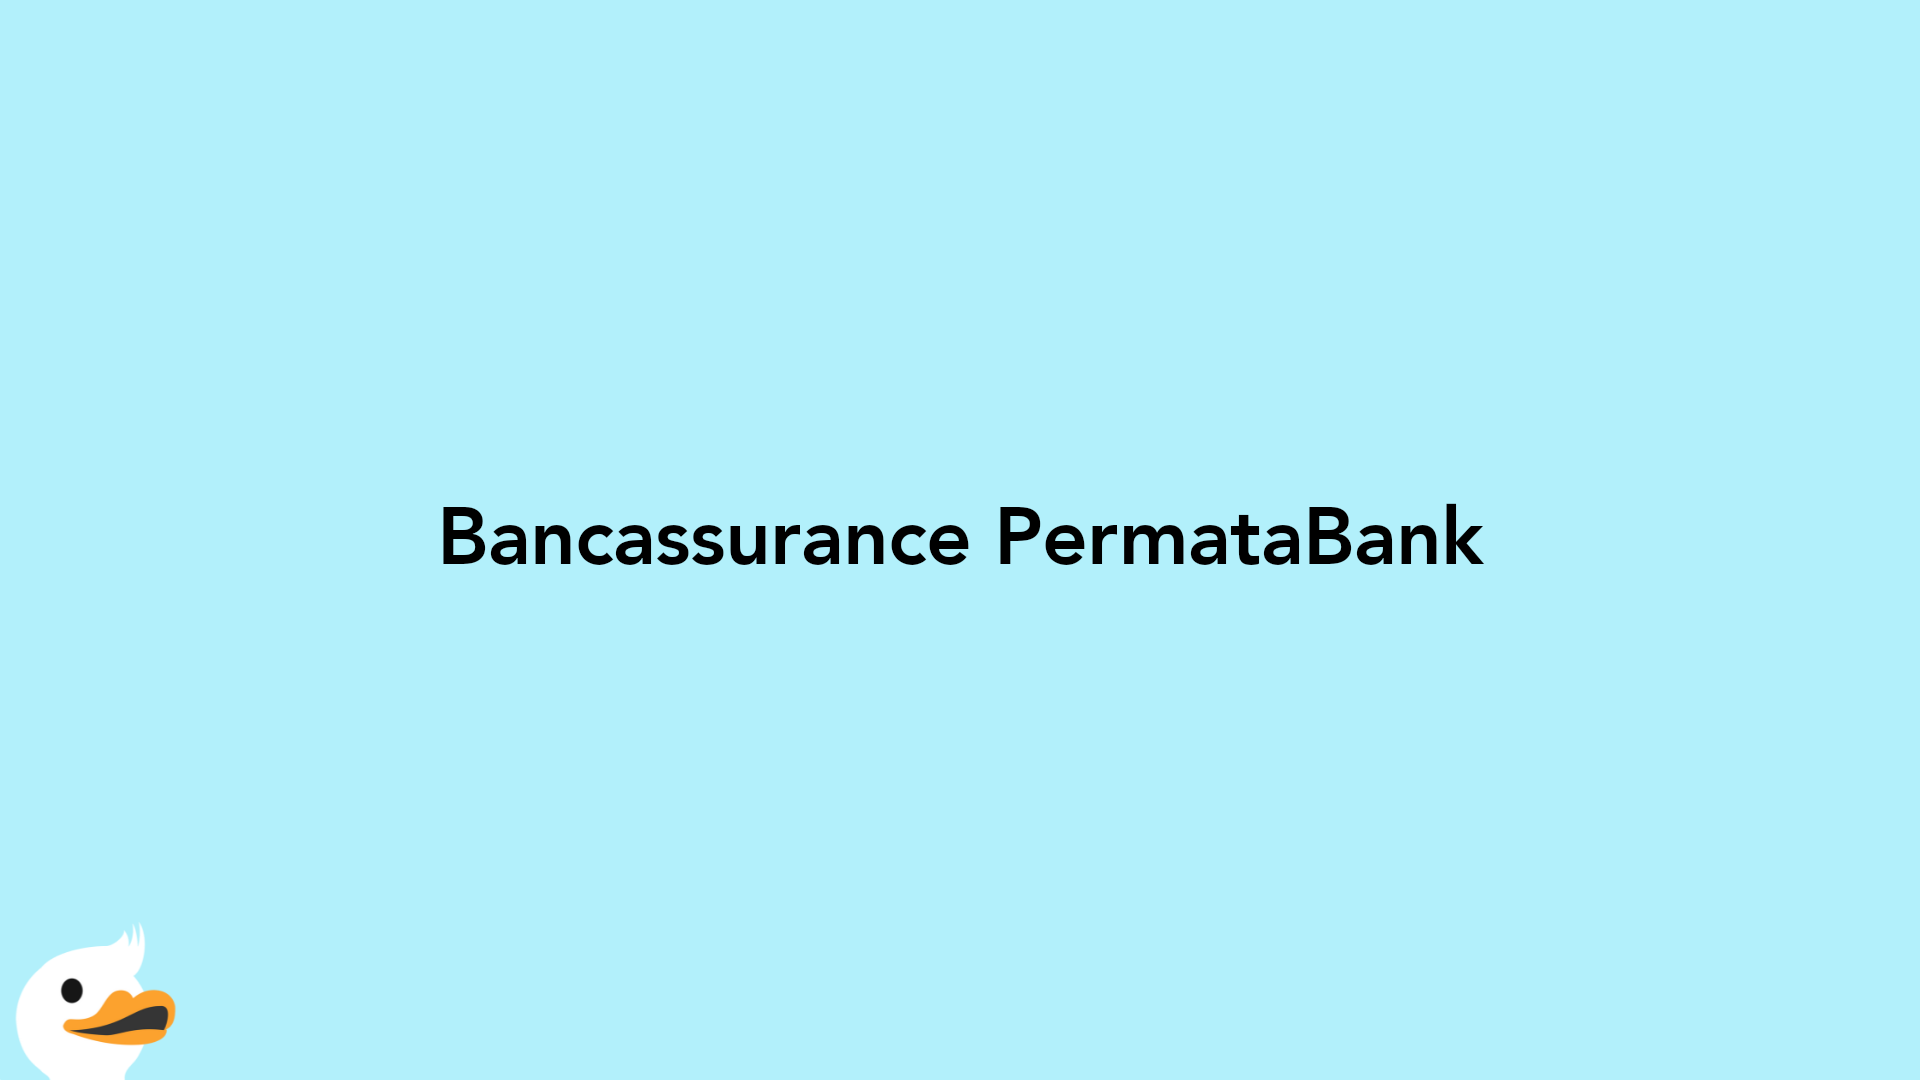 Bancassurance PermataBank